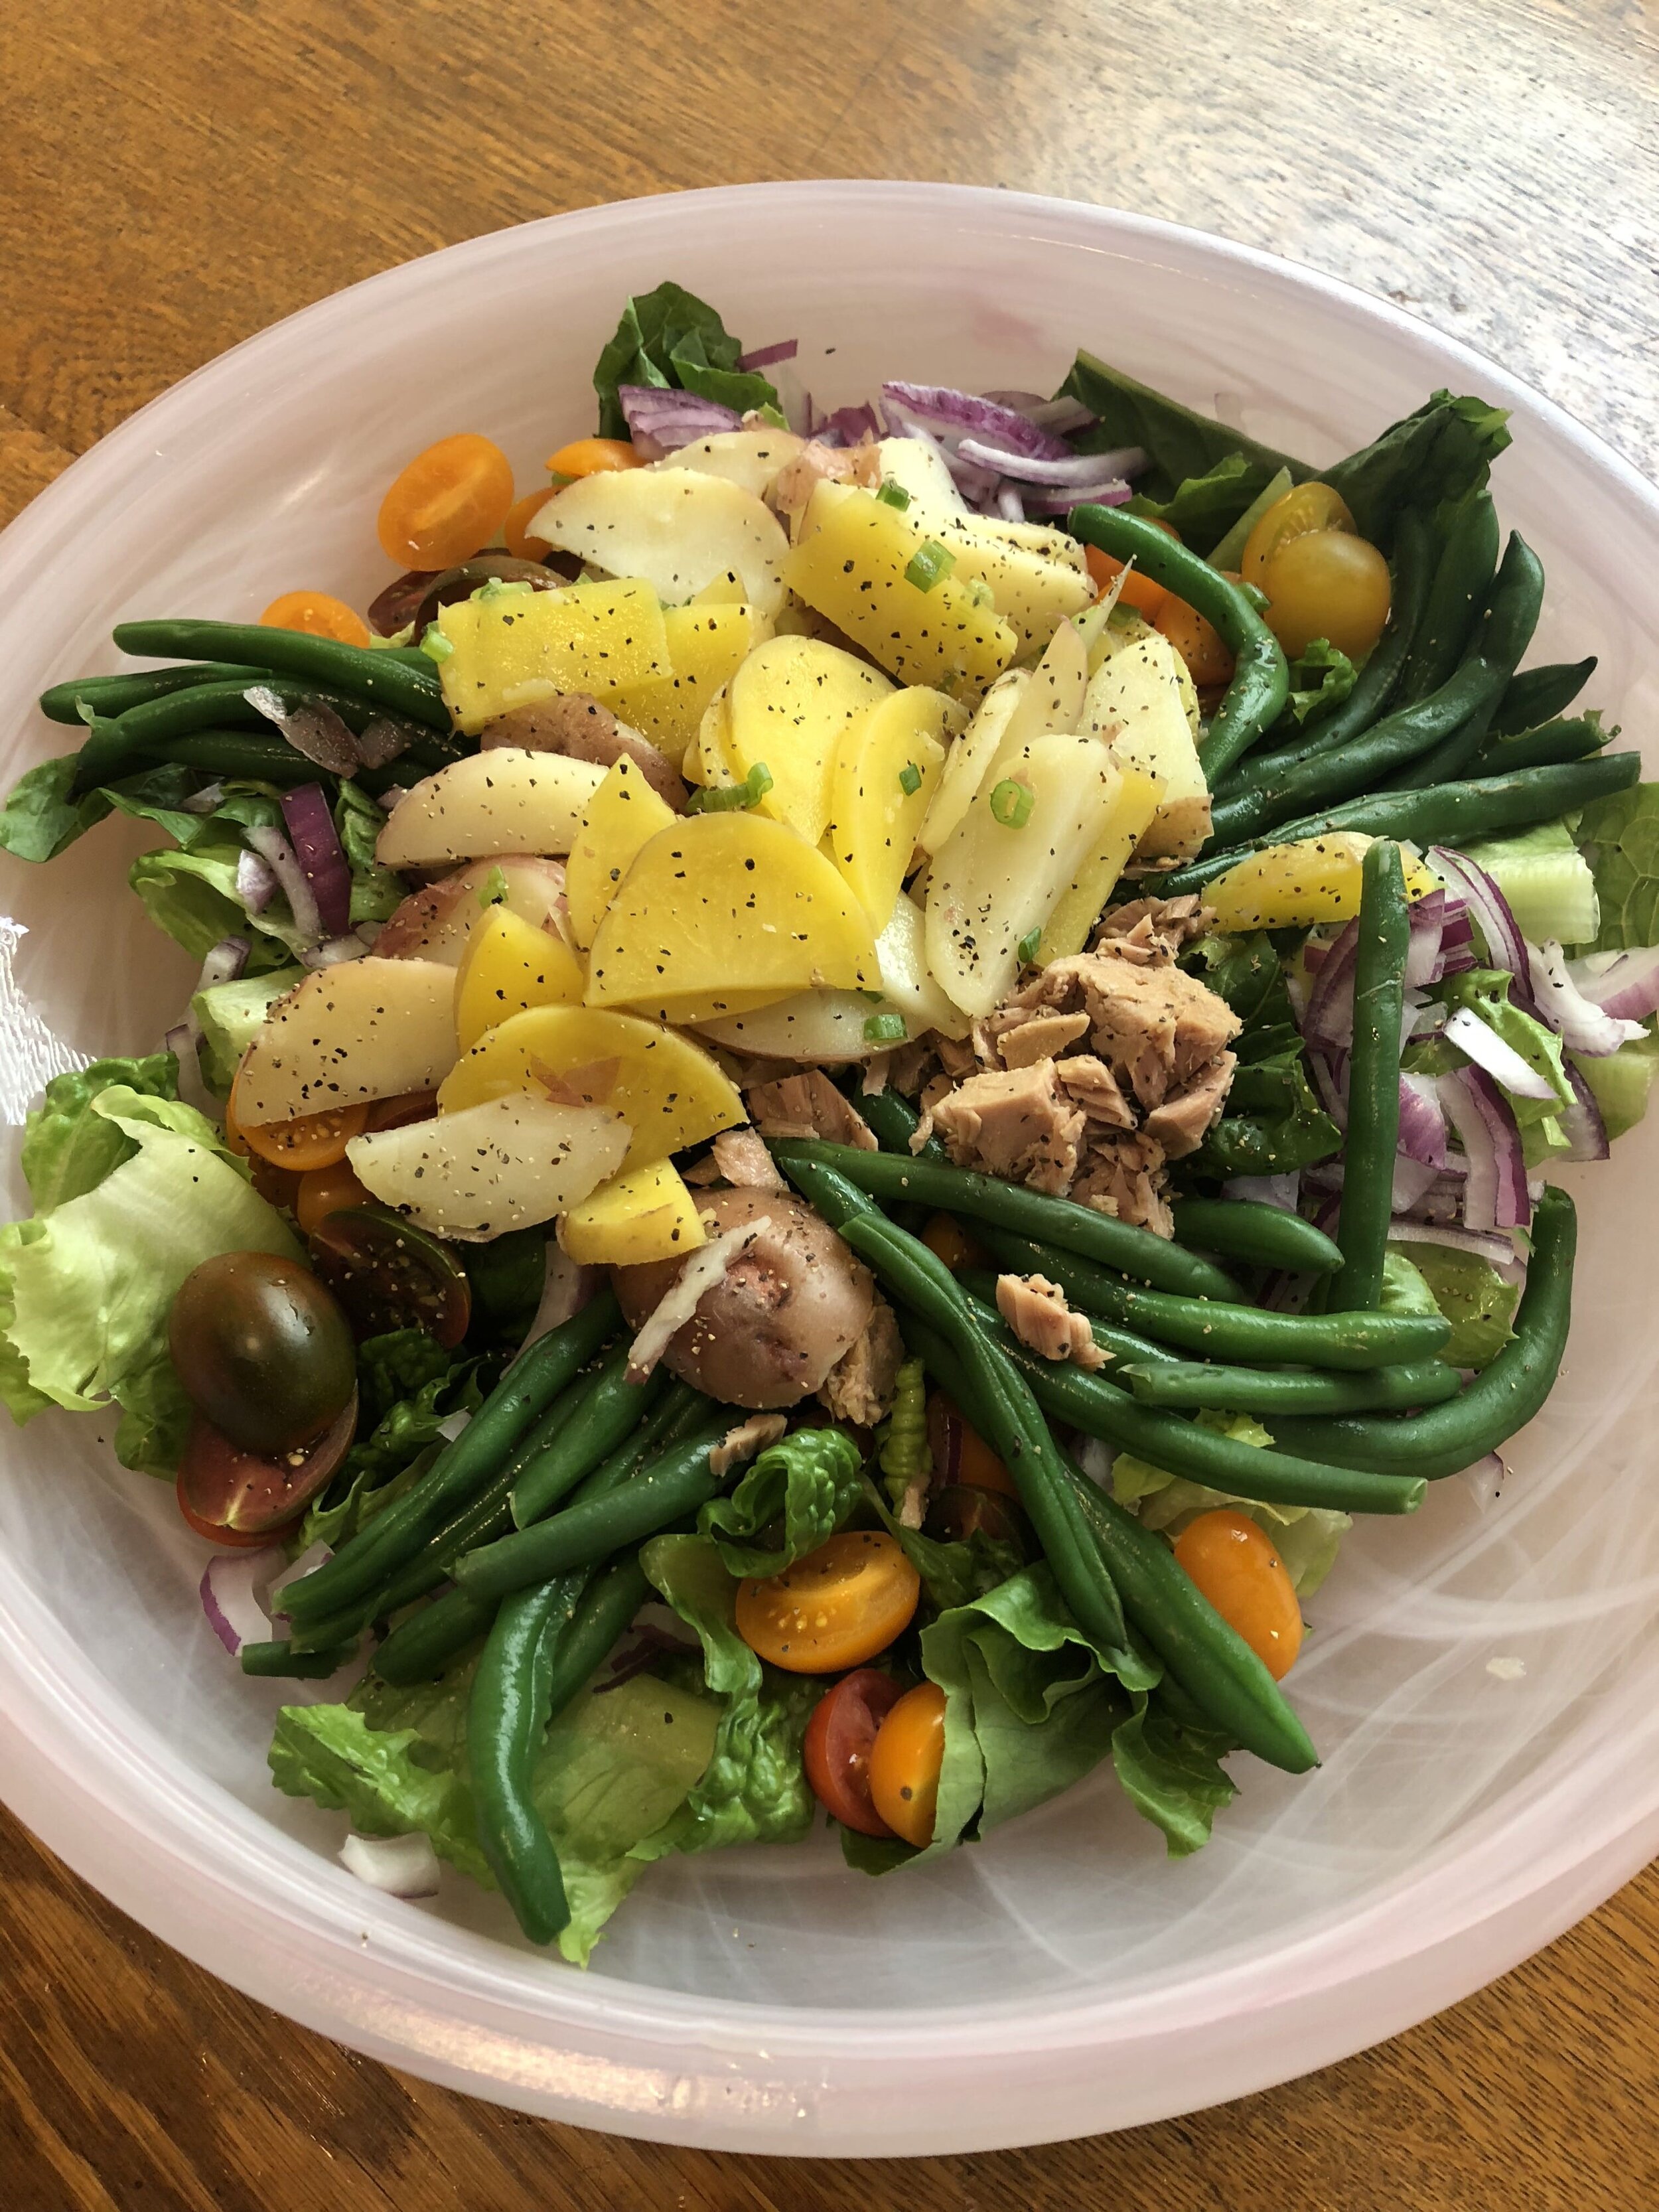 Julia's Nicoise Salad